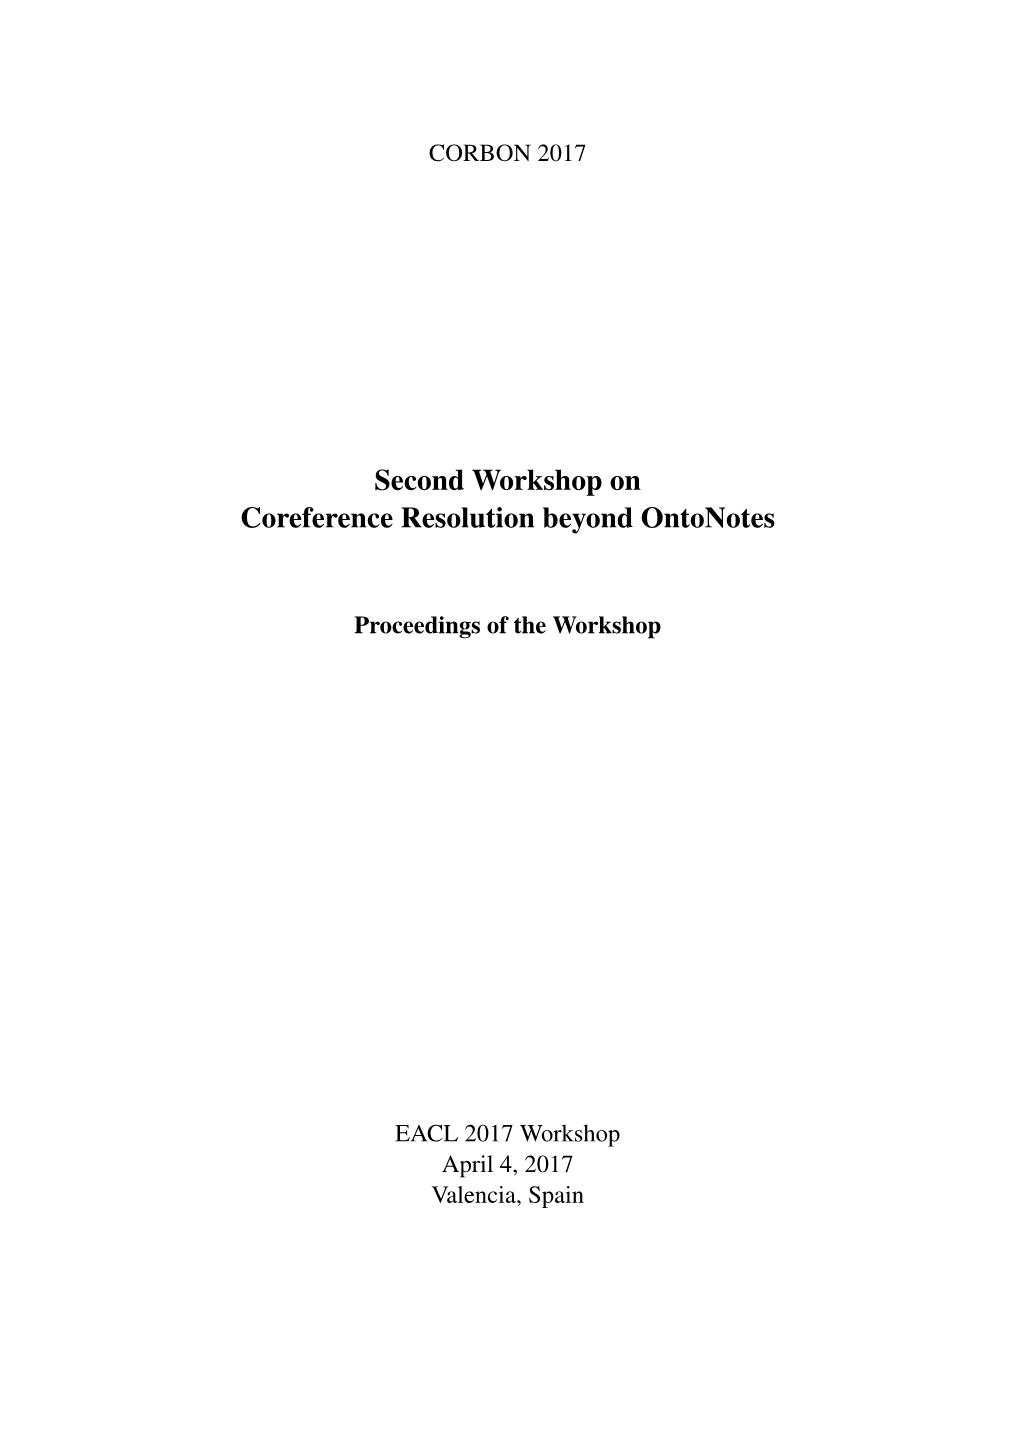 Second Workshop on Coreference Resolution Beyond Ontonotes